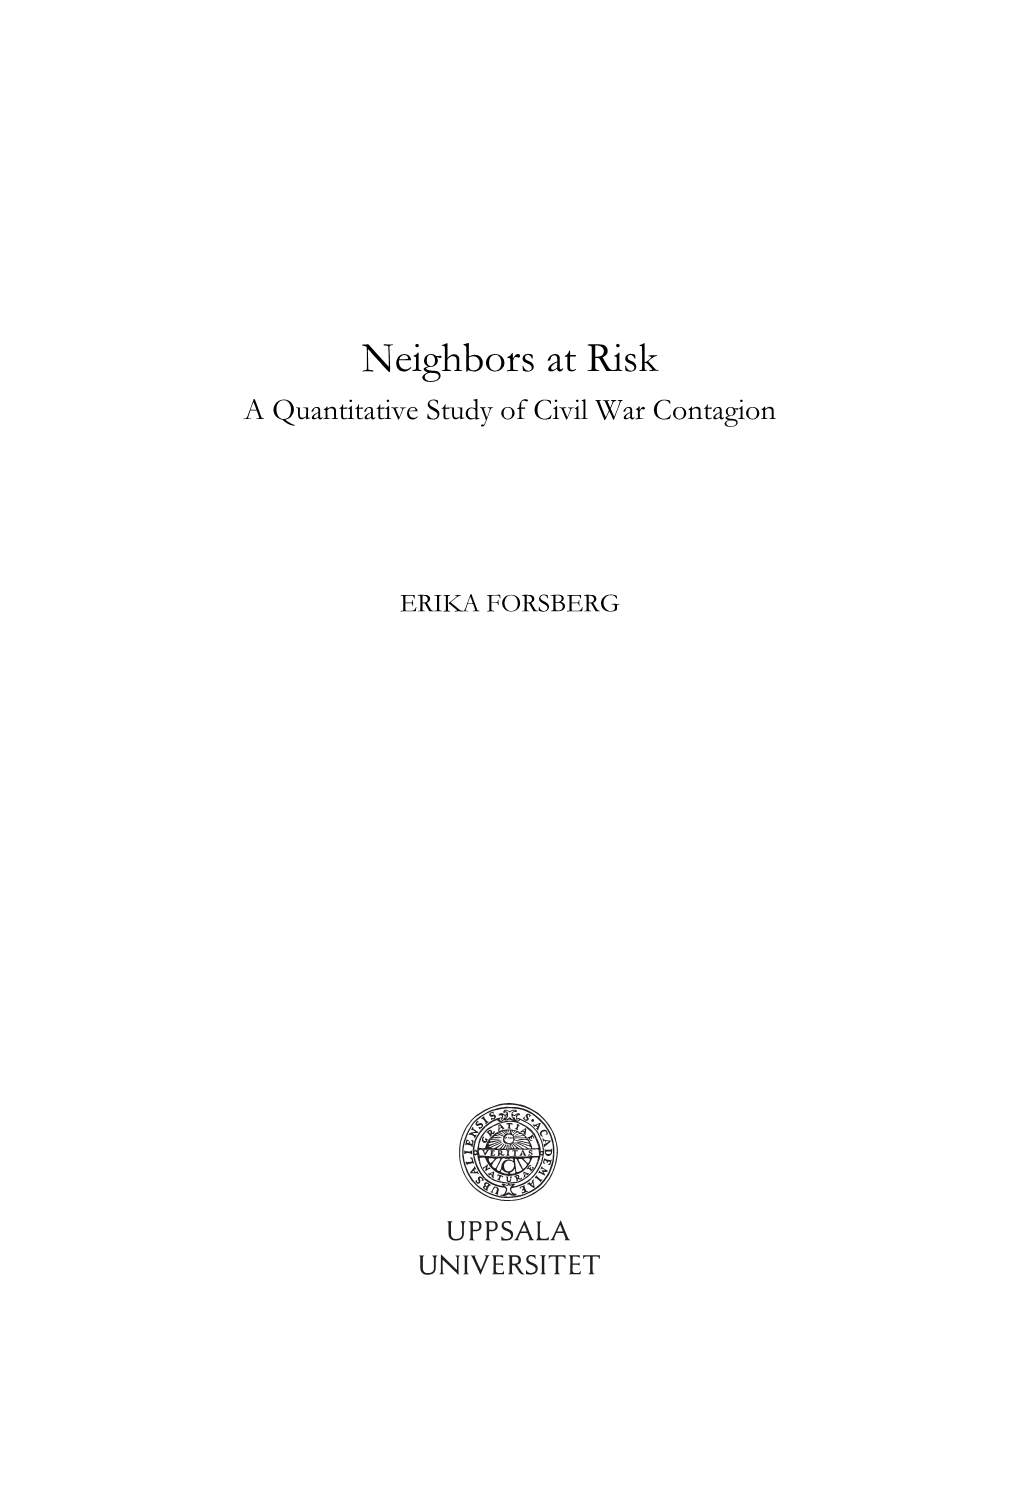 Neighbors at Risk: a Quantitative Study of Civil War Contagion